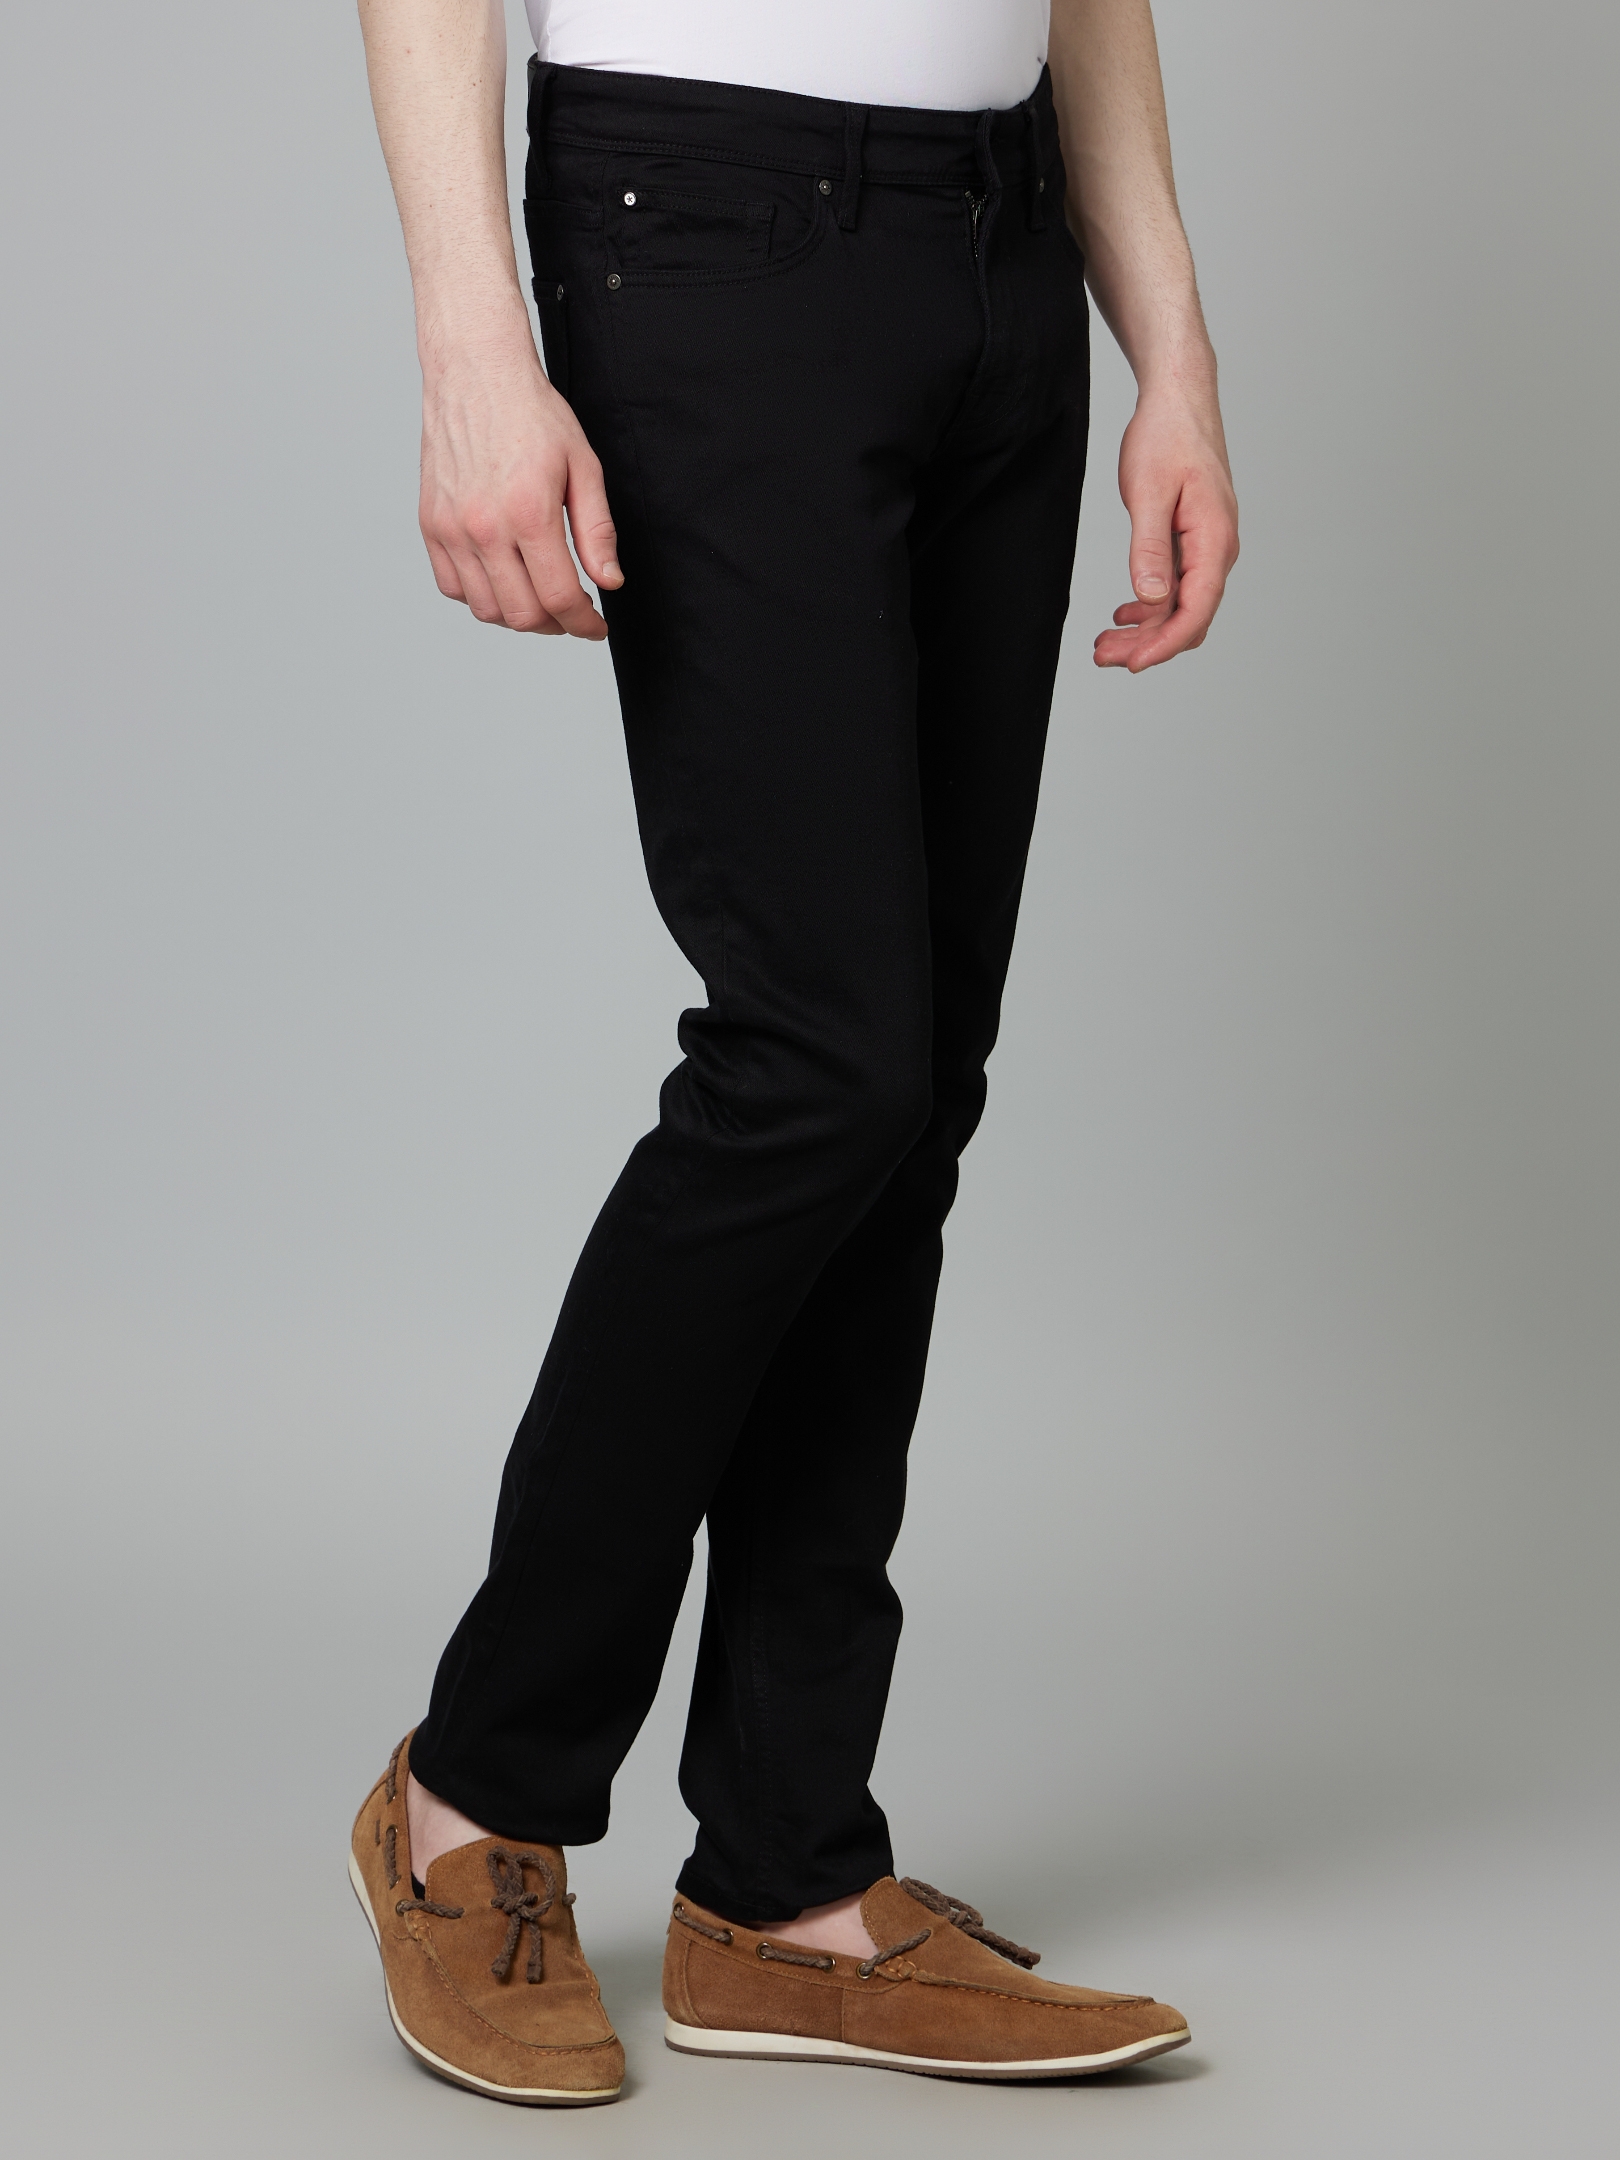 Men's Jeans & Denim Clothing | SNIPES USA